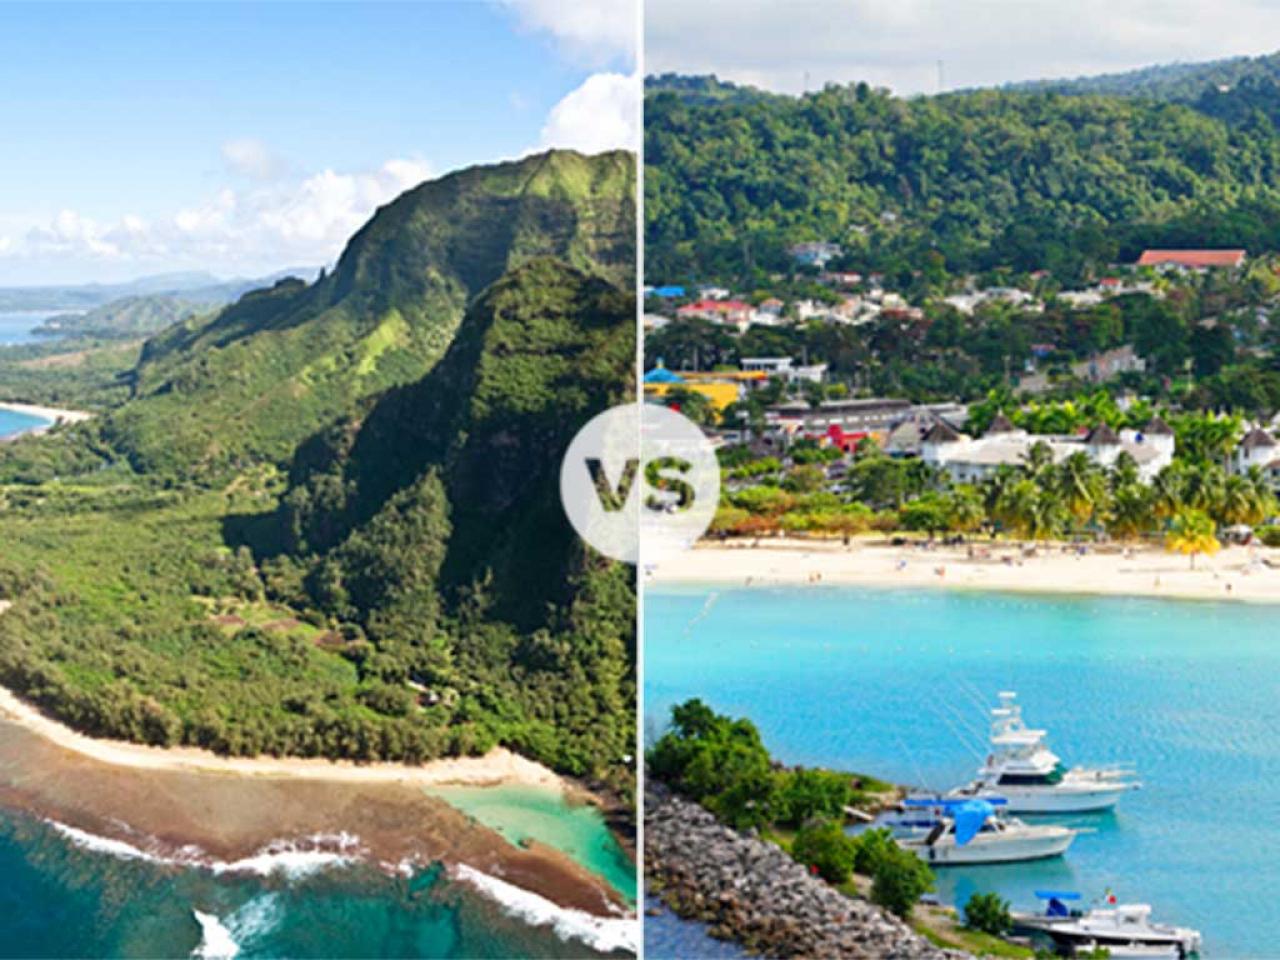 jamaica vs